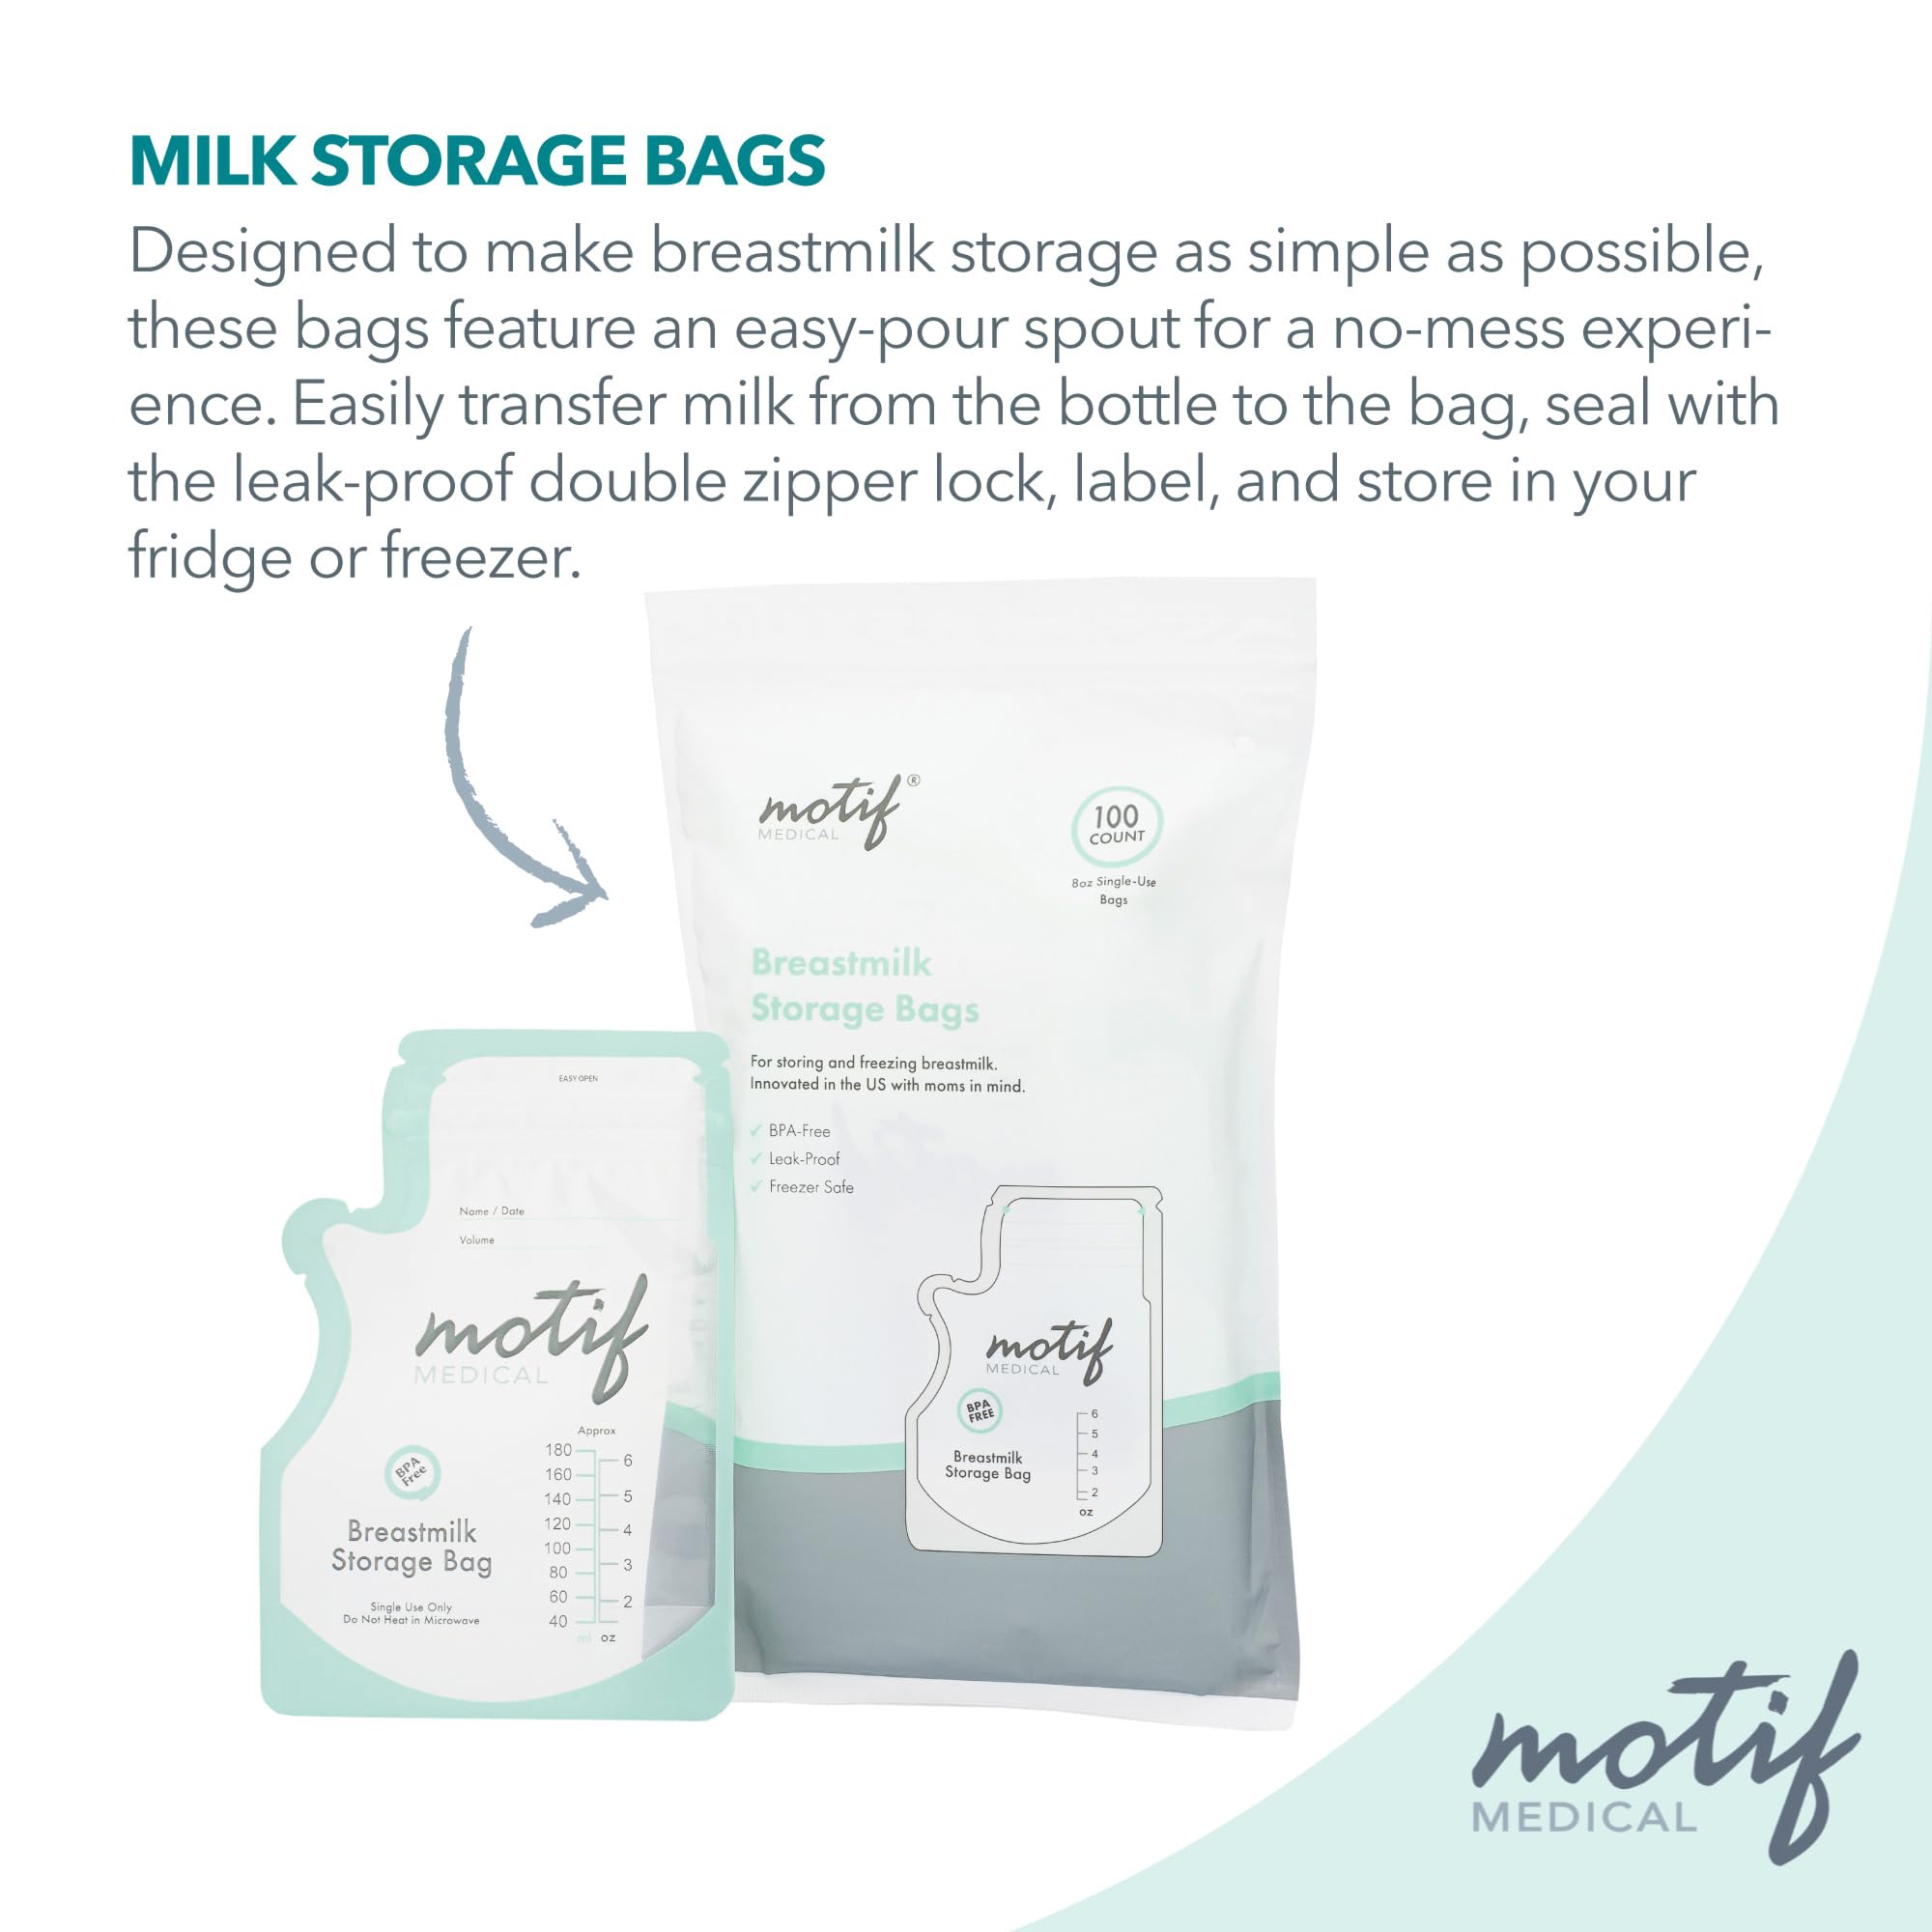 Motif Medical, Milk Storage Bags, 8 oz Milk Freezer Bag with Easy Pour Spout, BPA Free, Write-On Label - 100 Count